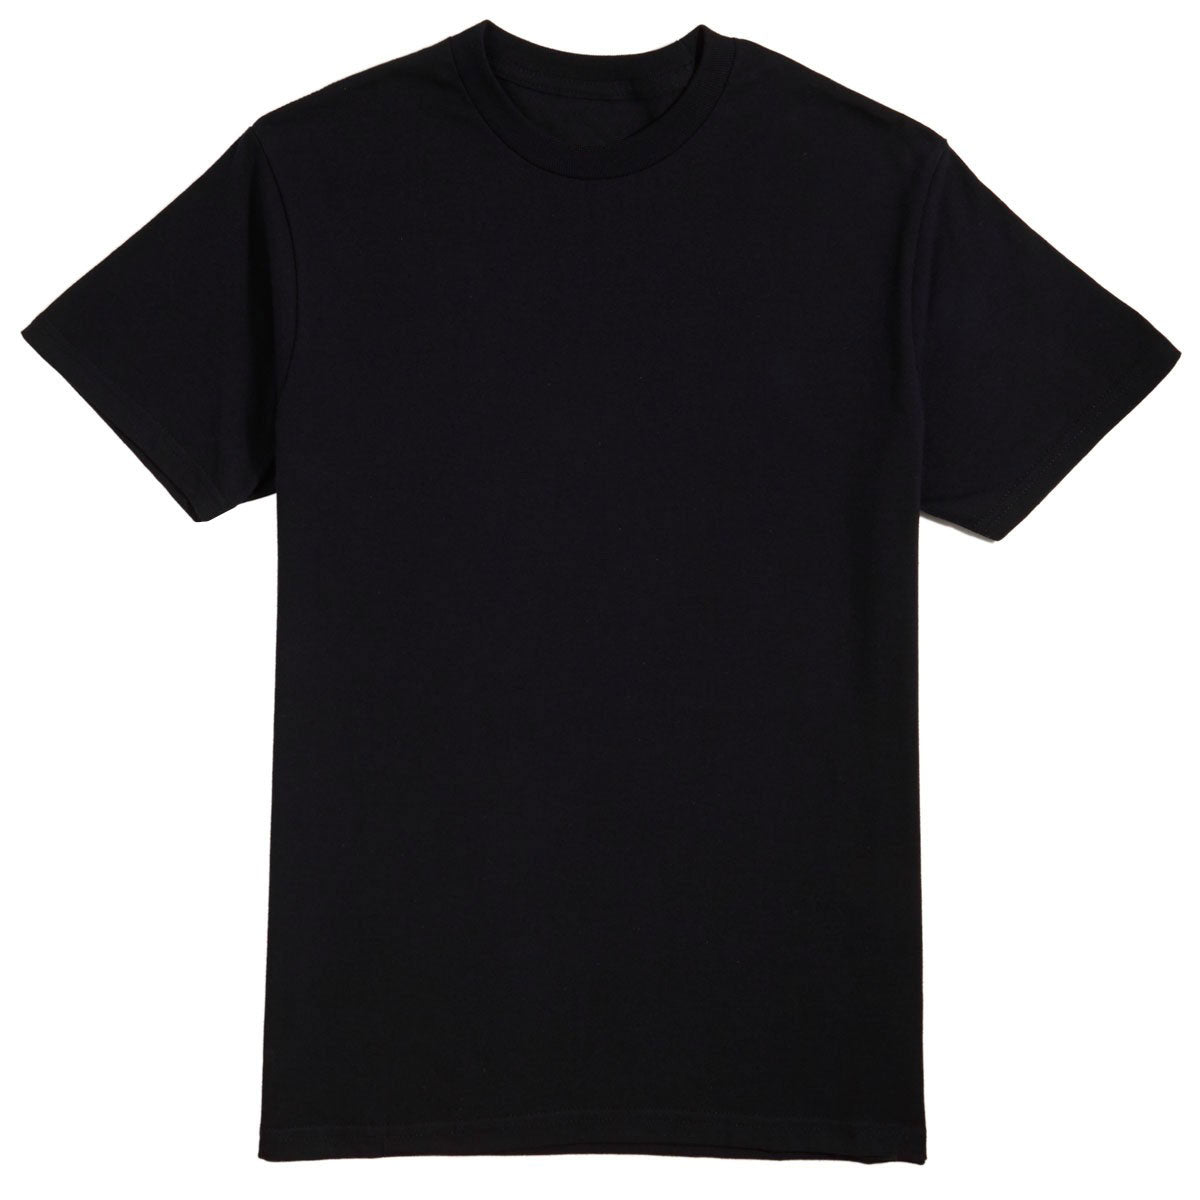 Converse Flash Sheet T-Shirt - Black - SM image 1